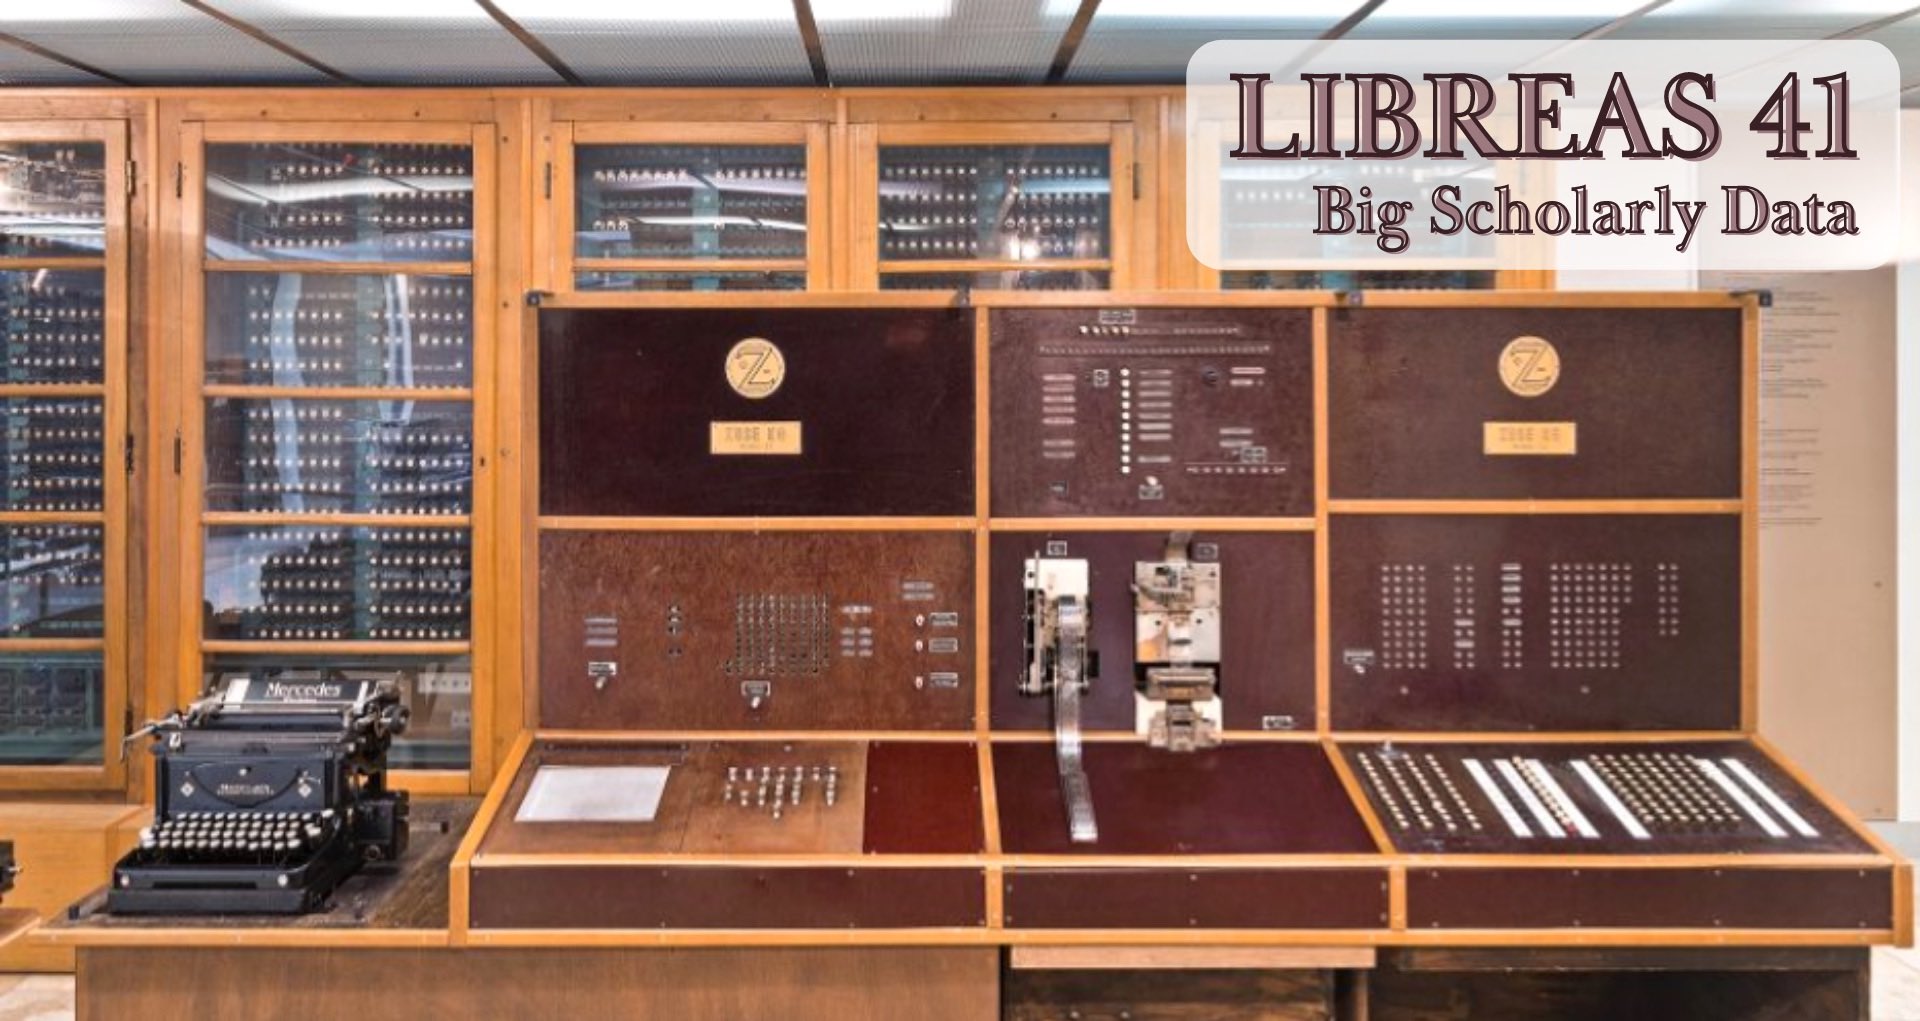 LIBREAS. Library Ideas #41